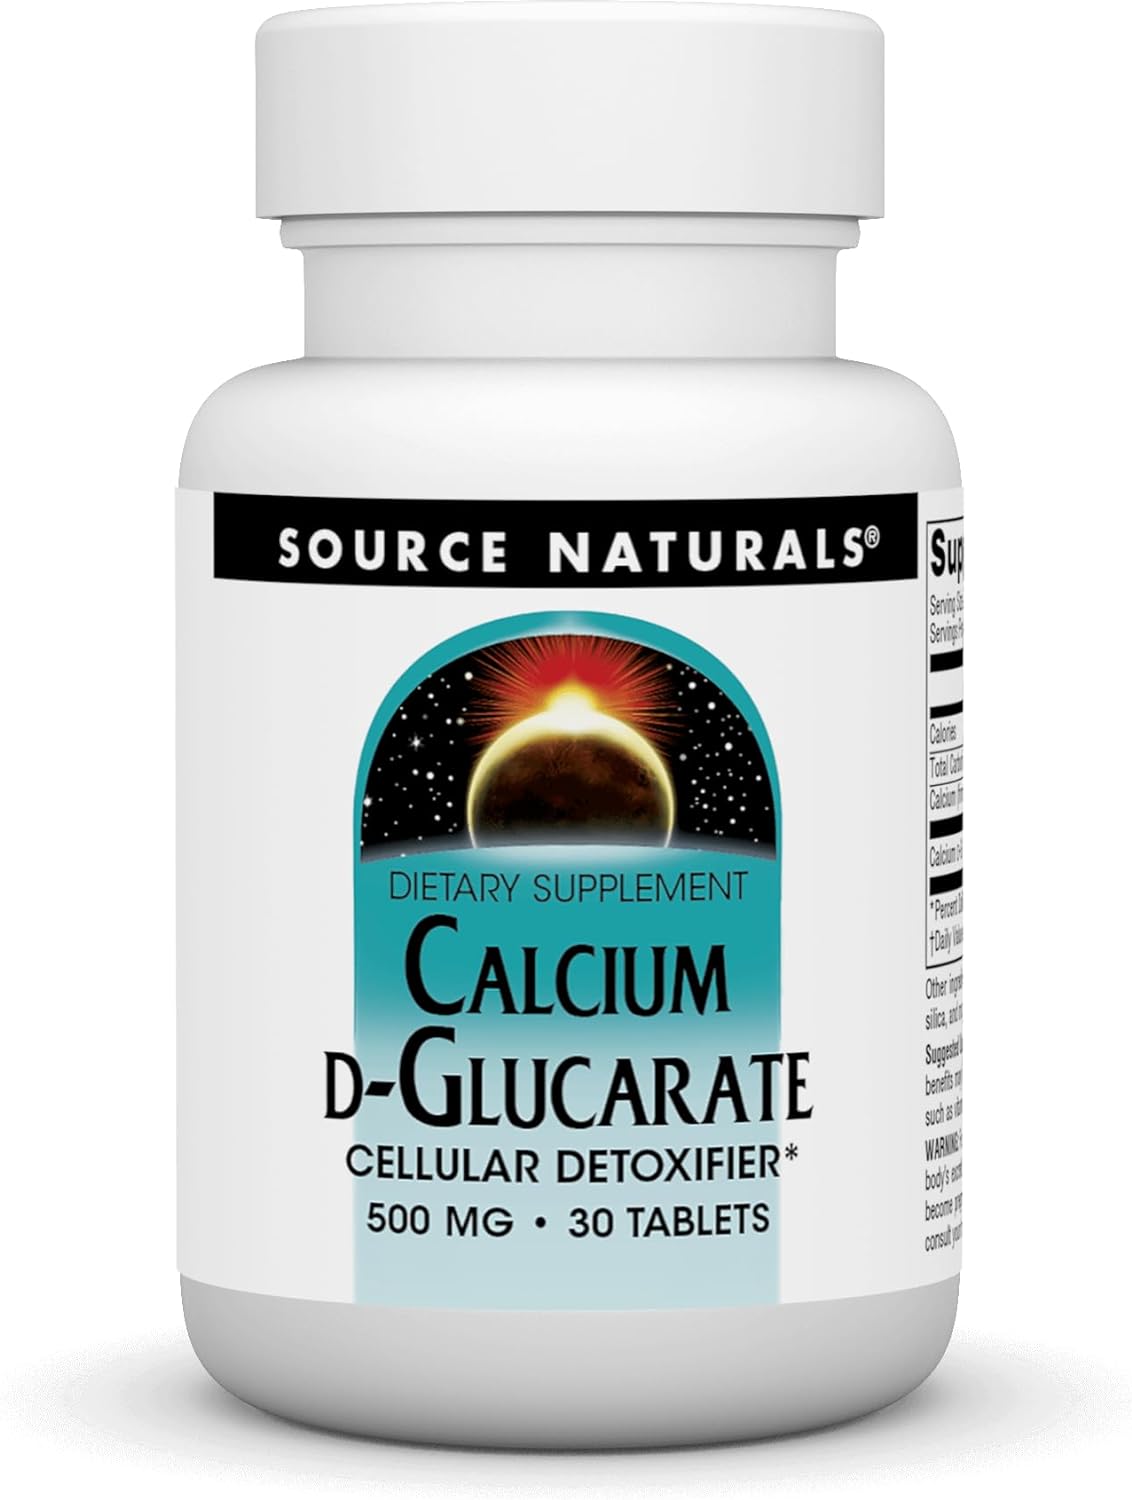 Source Naturals Calcium D-Glucarate 500mg Cellular Detoxifier - 30 Tablets